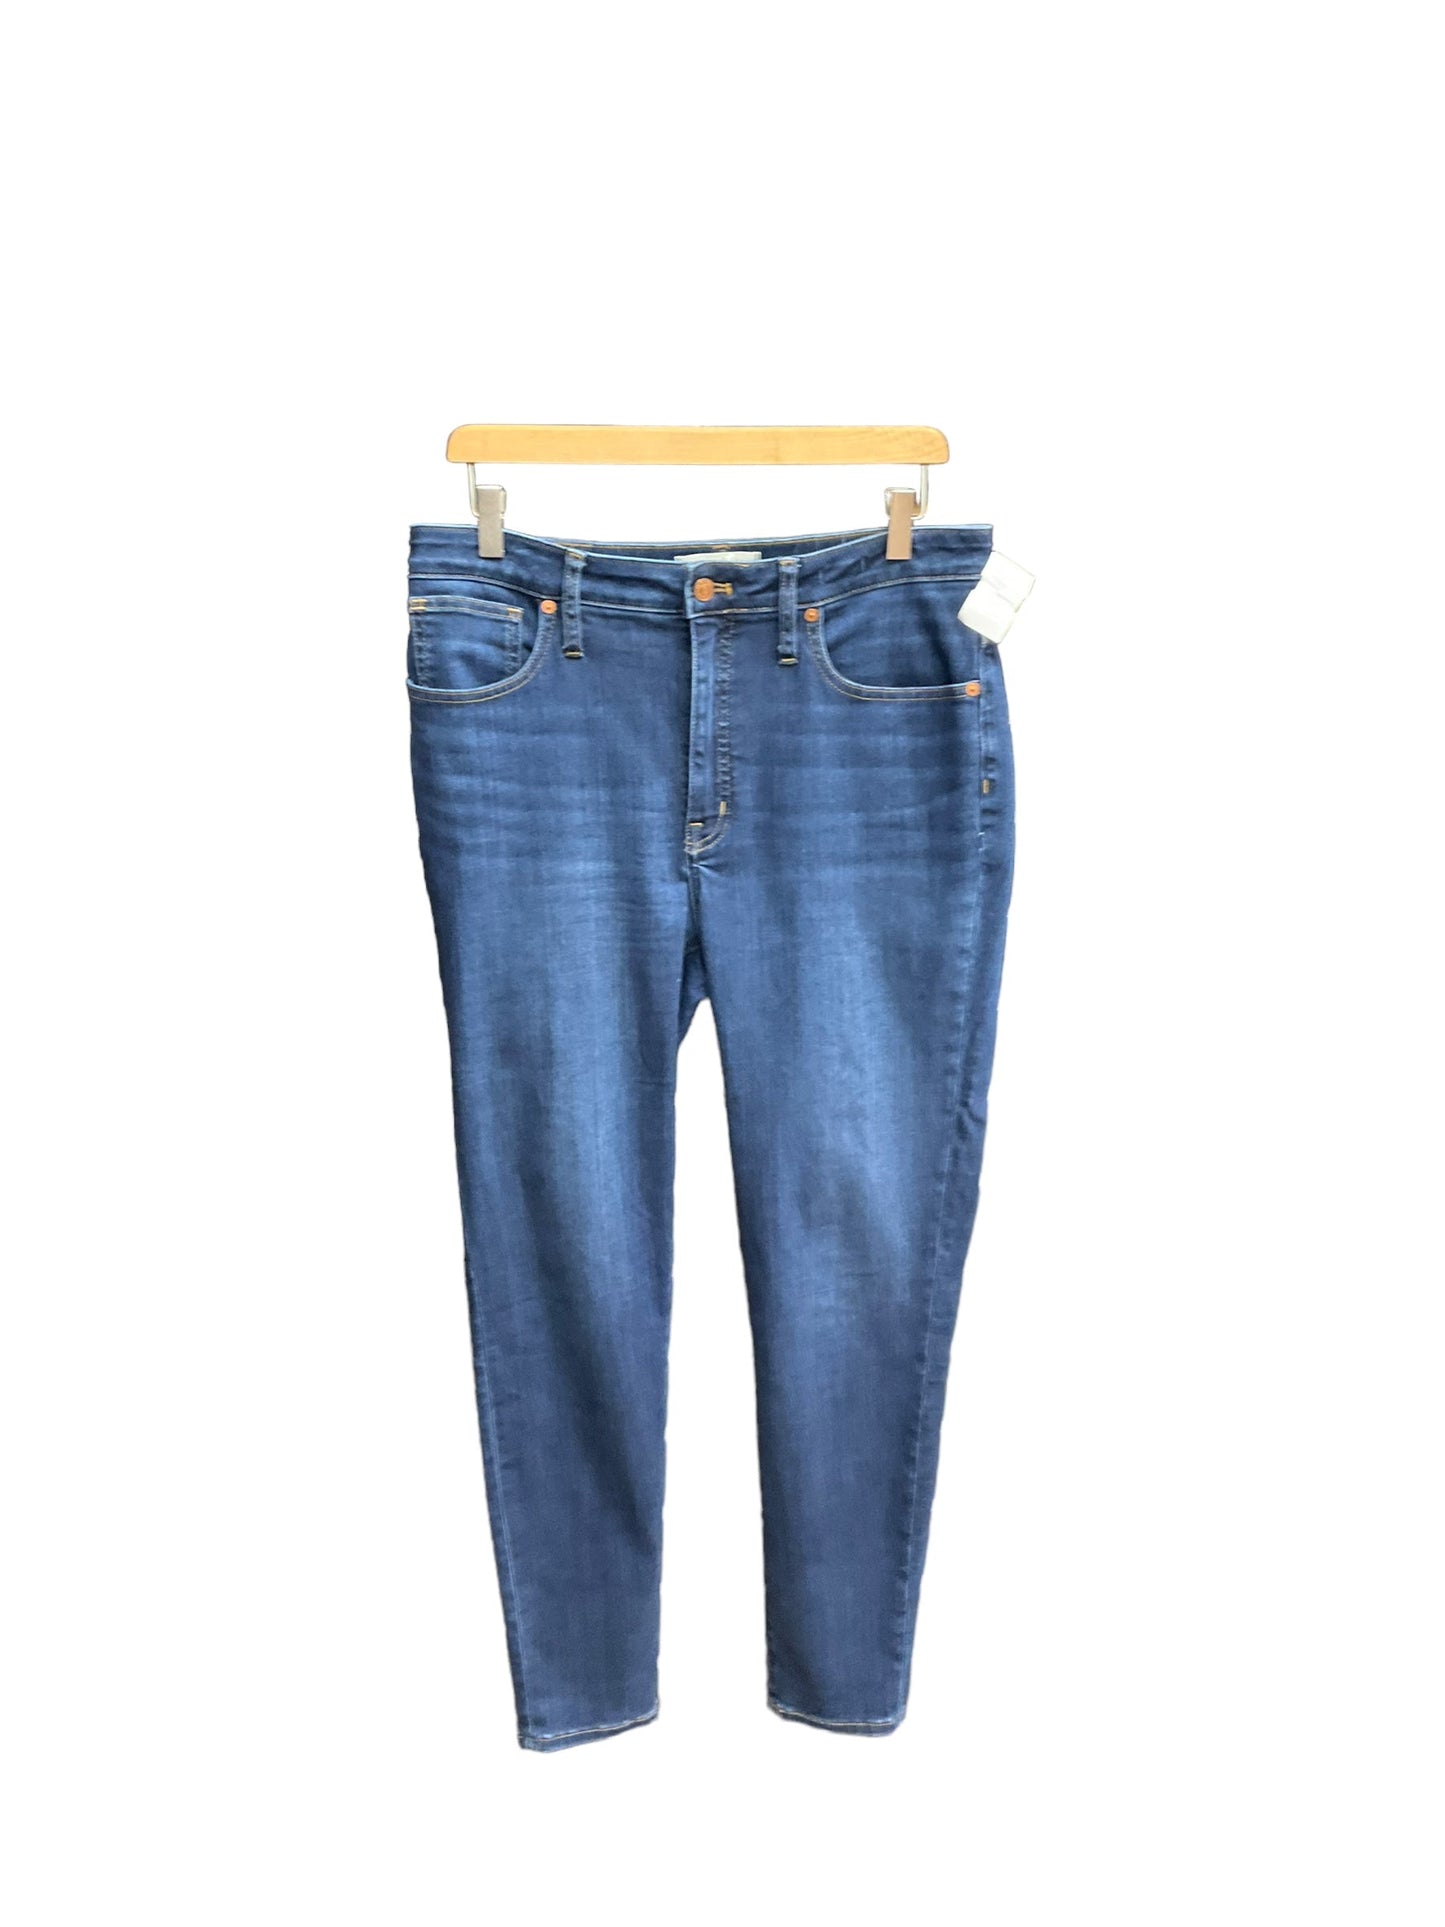 Blue Denim Jeans Cropped J Brand, Size 14